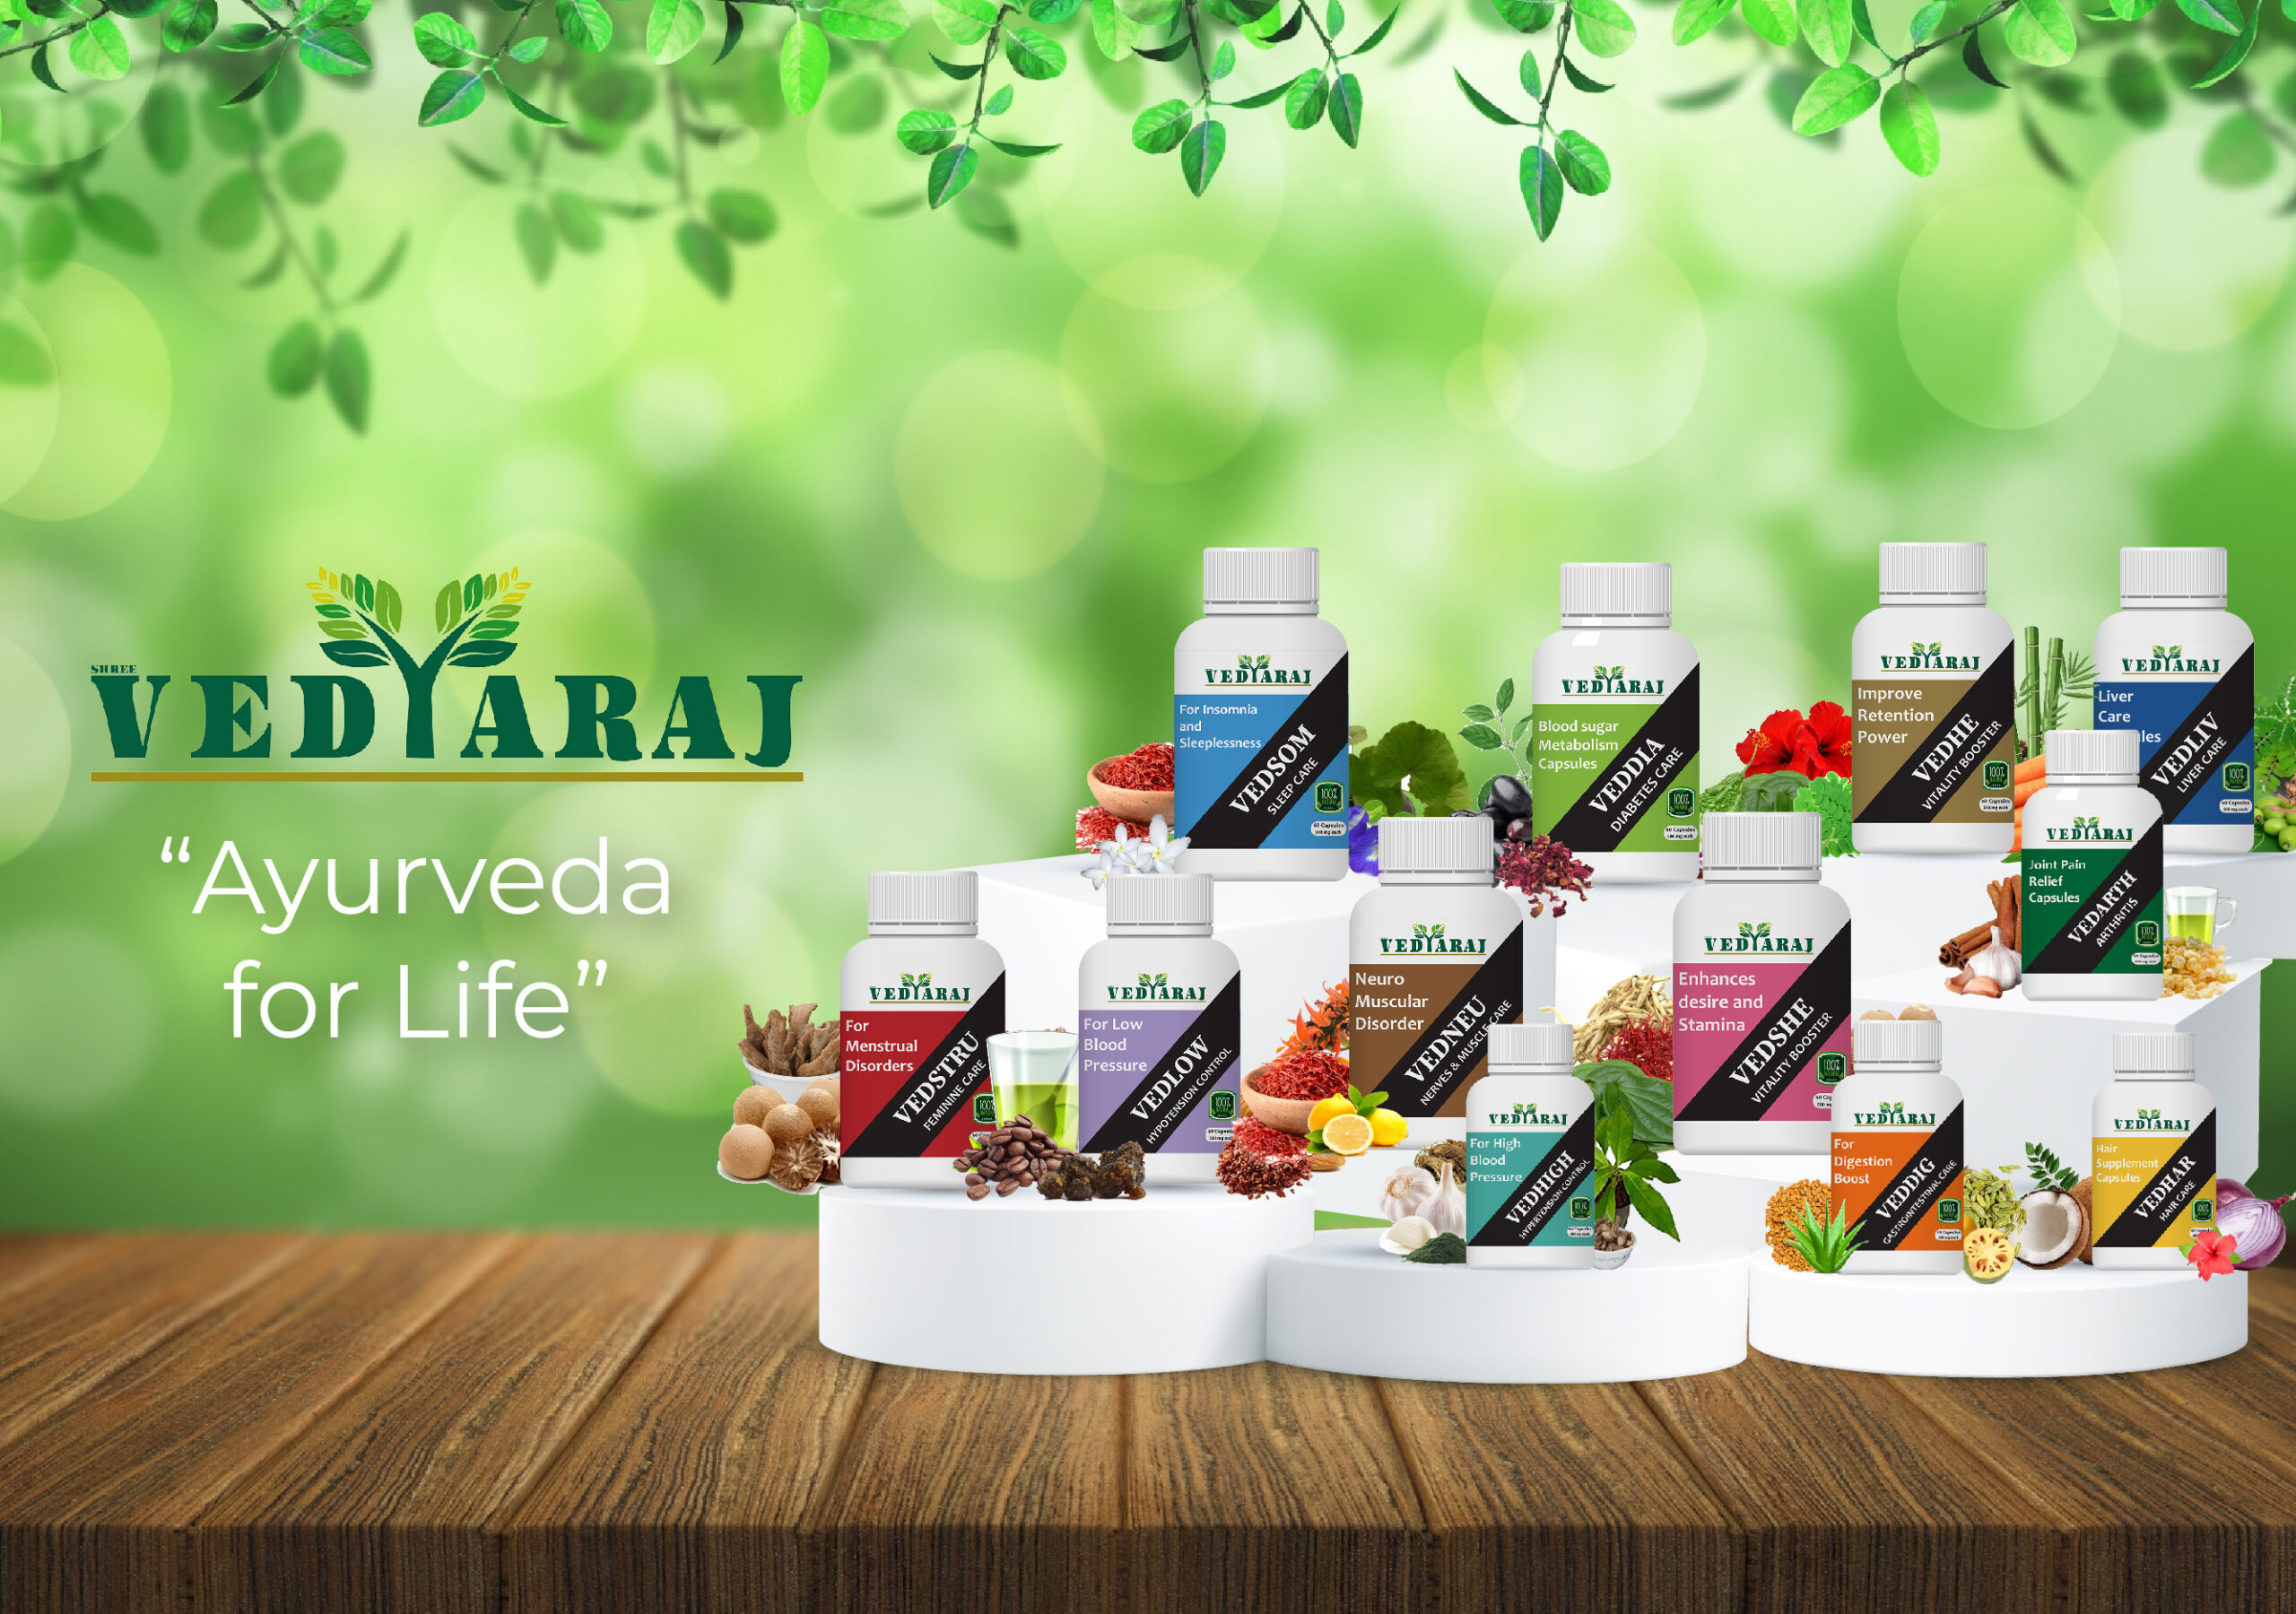 Shree Vedyaraj: The Ayurvedic Brand Revolutionizing Wellness with Scientifically Optimized Formulations